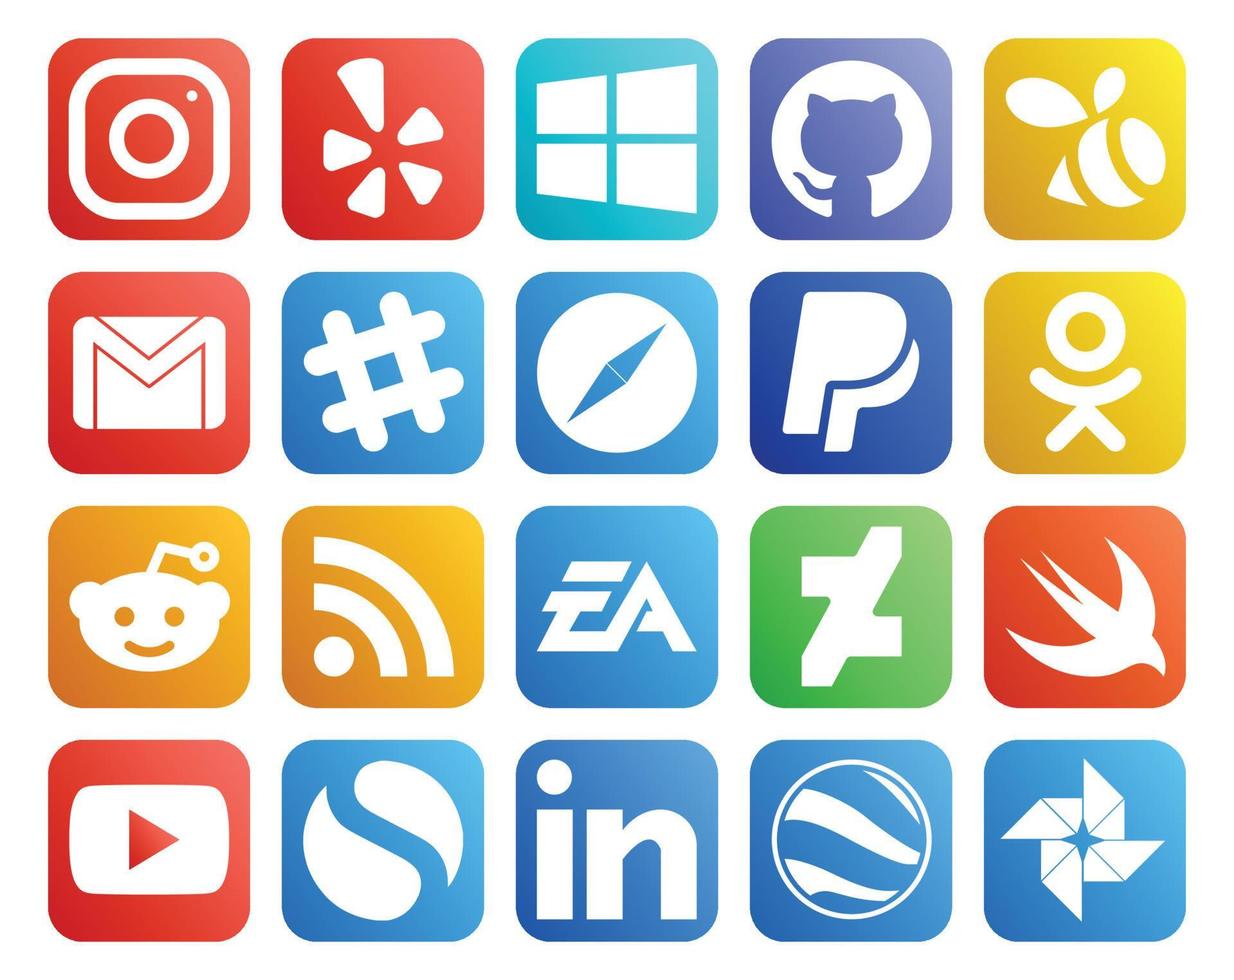 20 Social Media Icon Pack Including ea rss slack reddit paypal vector